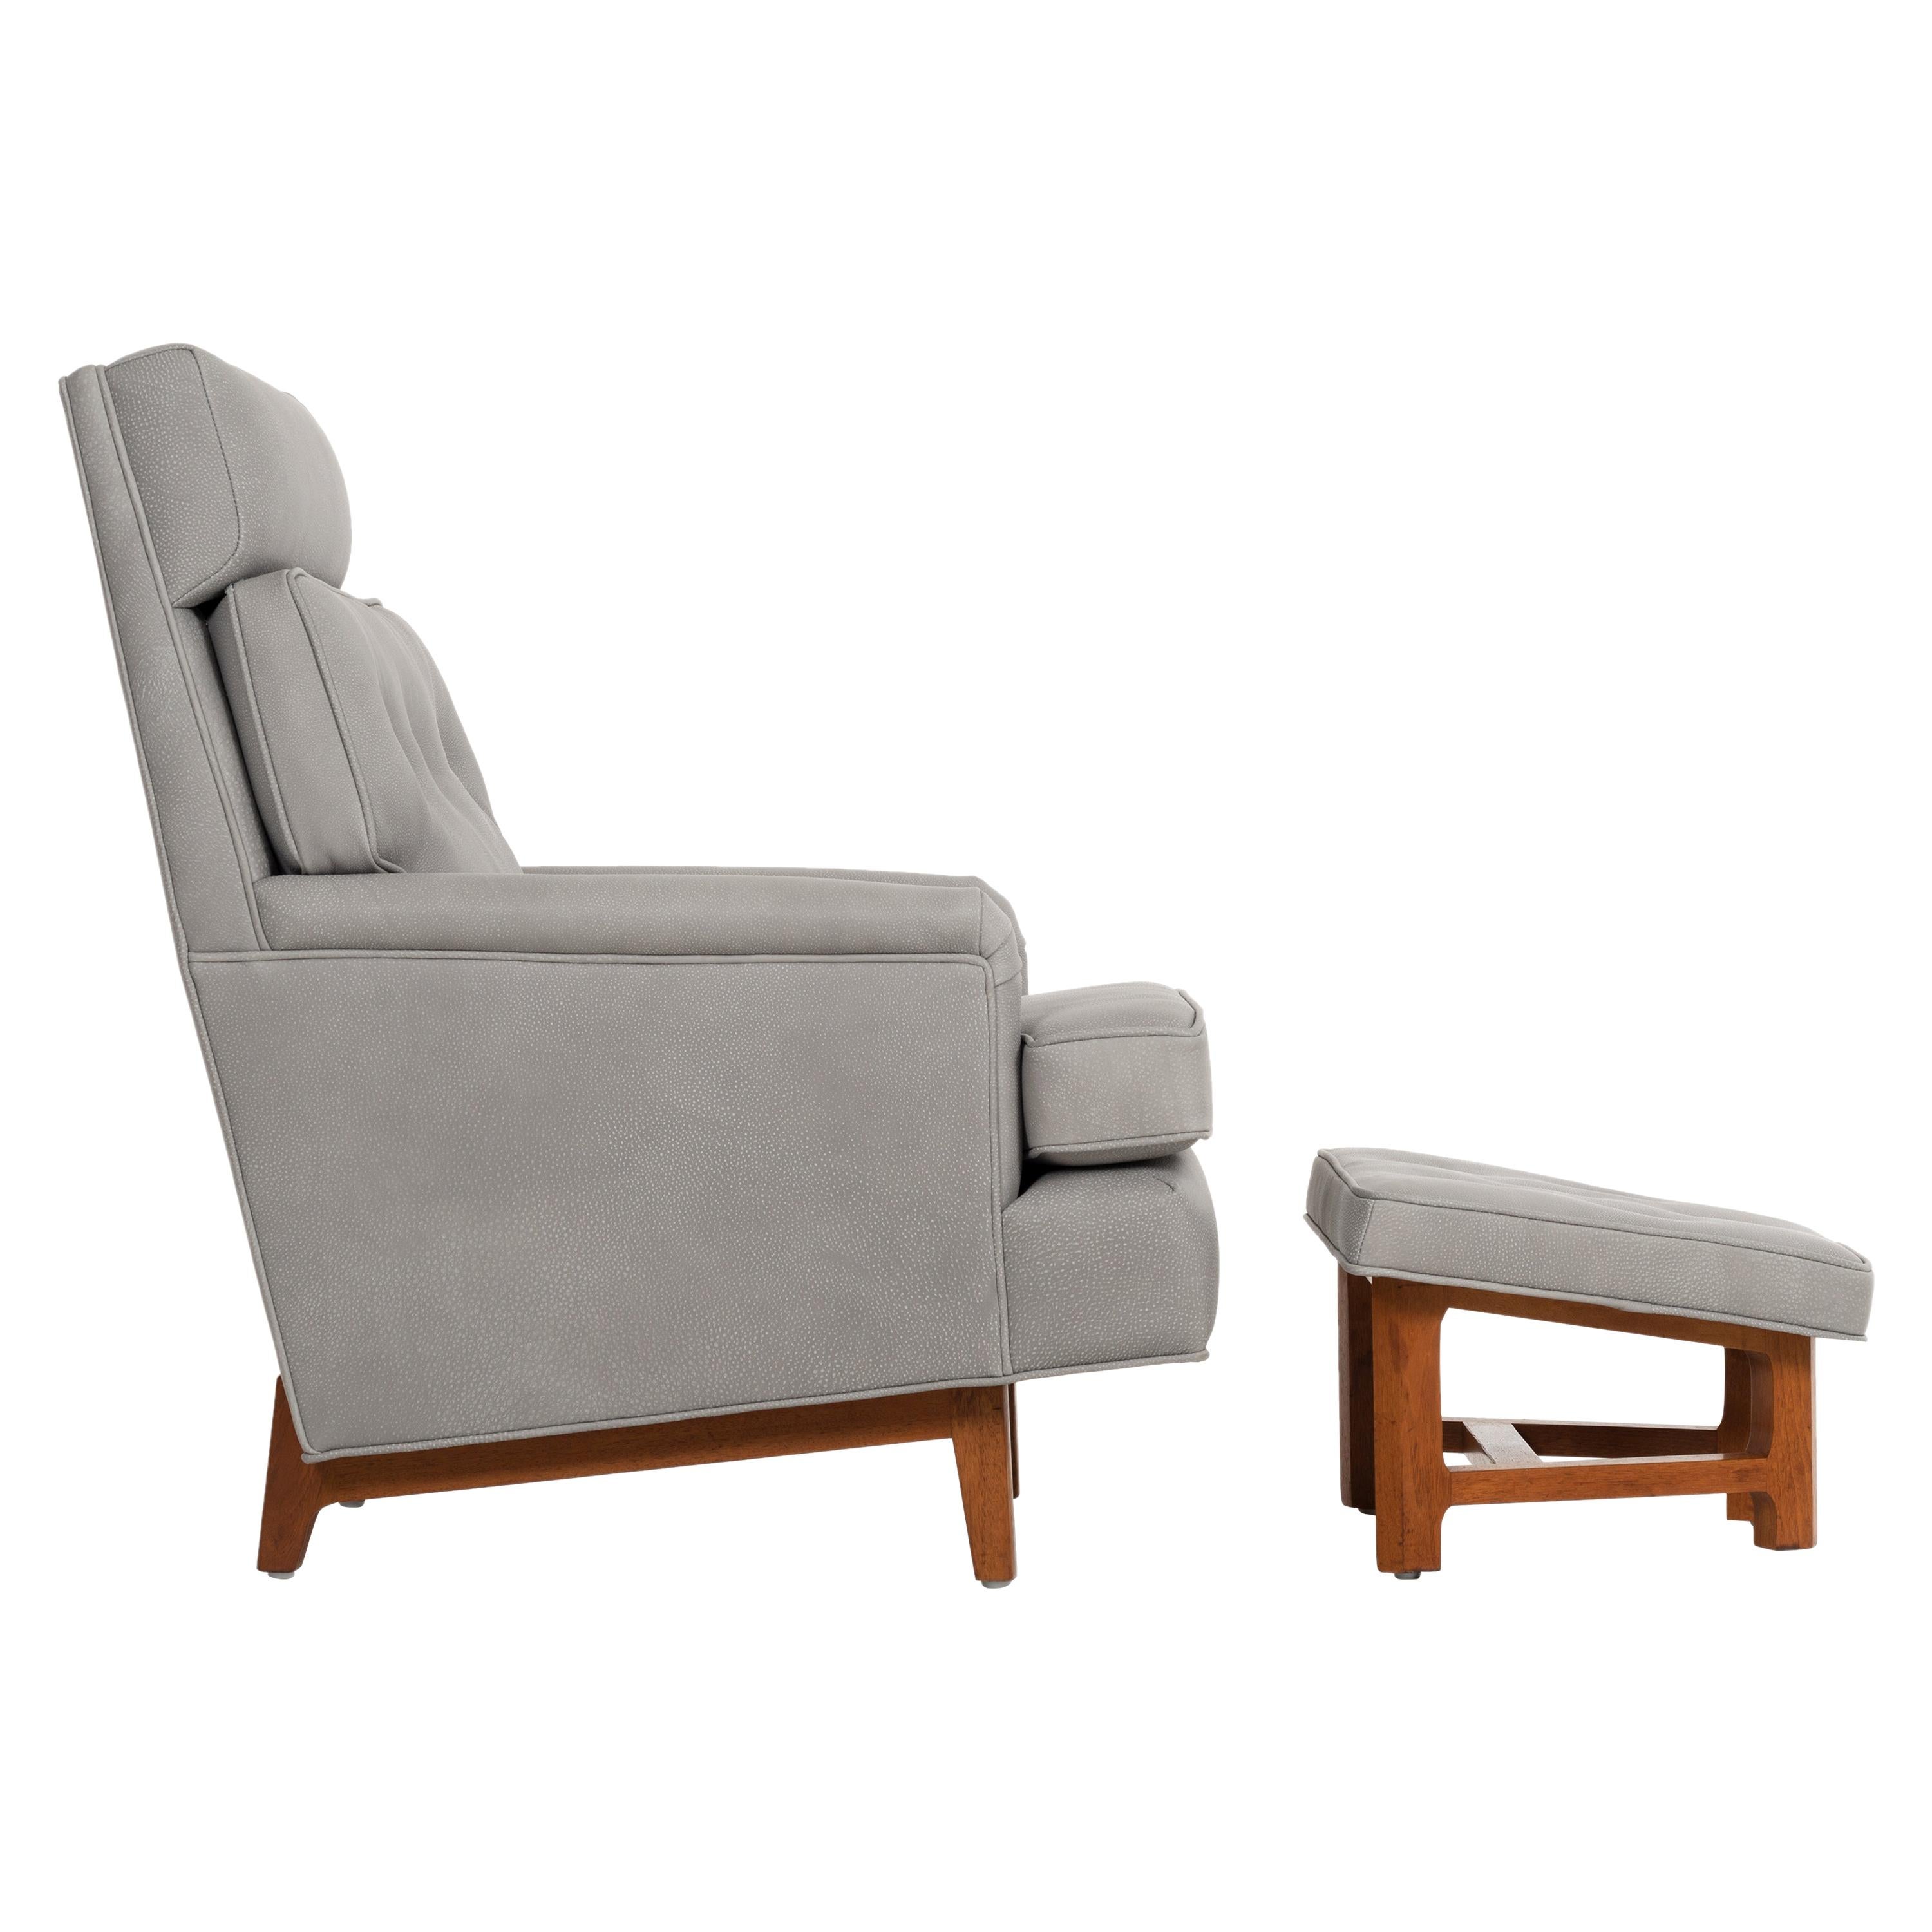 Edward Wormley for Dunbar Janus Lounge Chair and Ottoman